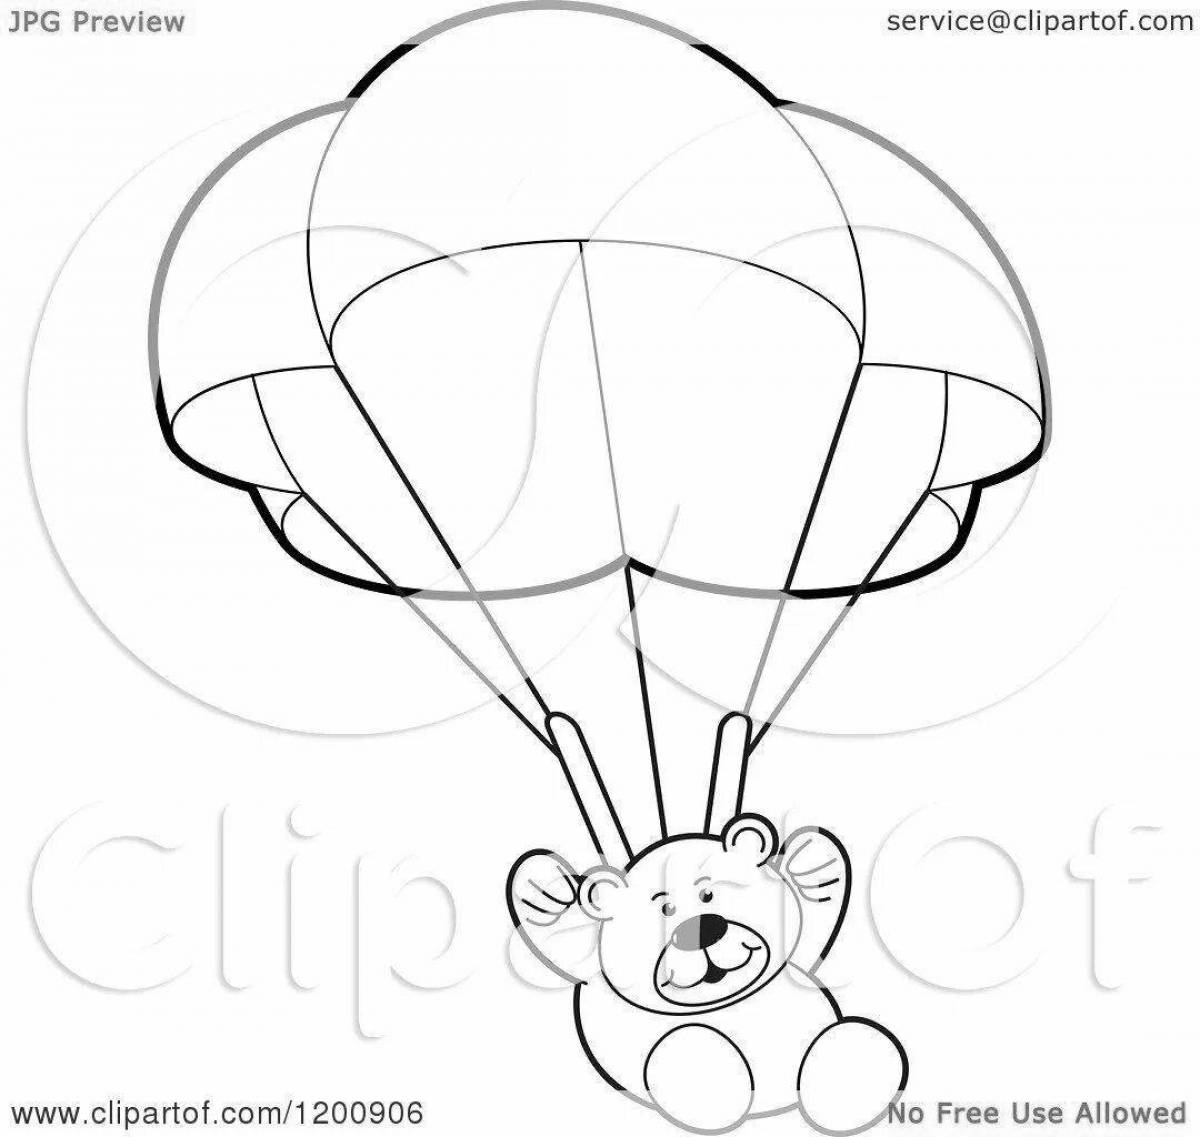 A fun parachute coloring book for preschoolers